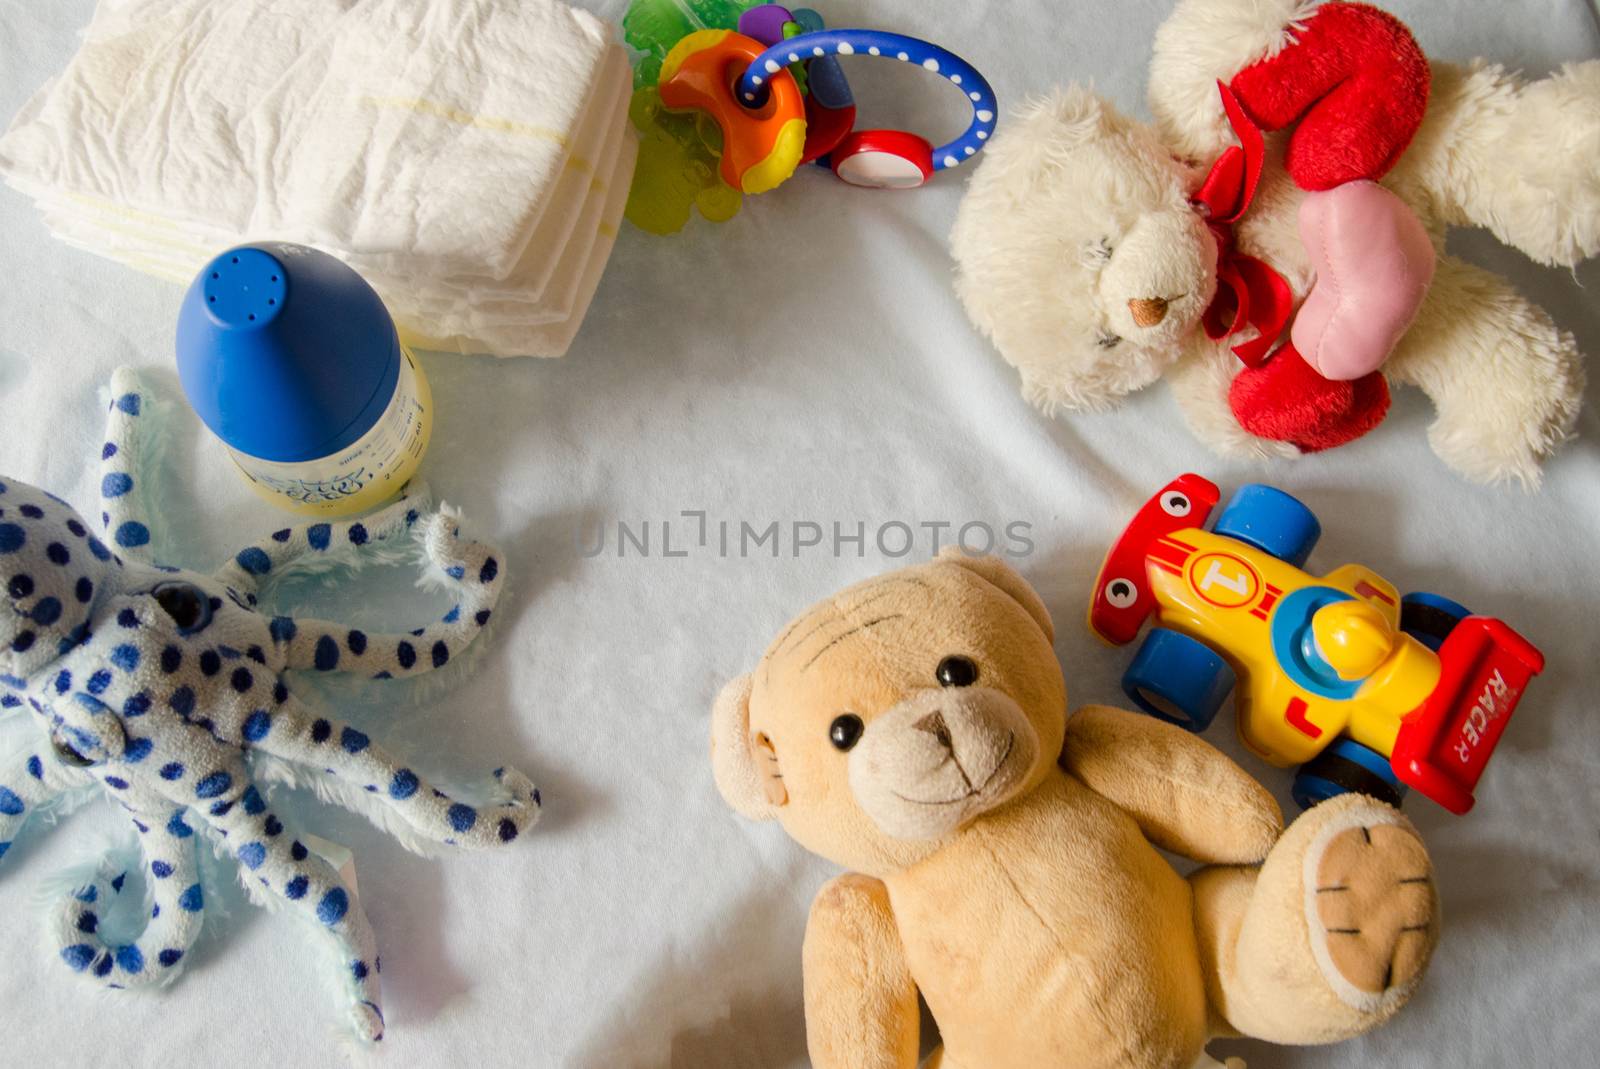 flat lay of baby stuff, diapers, octopus, teddy bear, teething toys